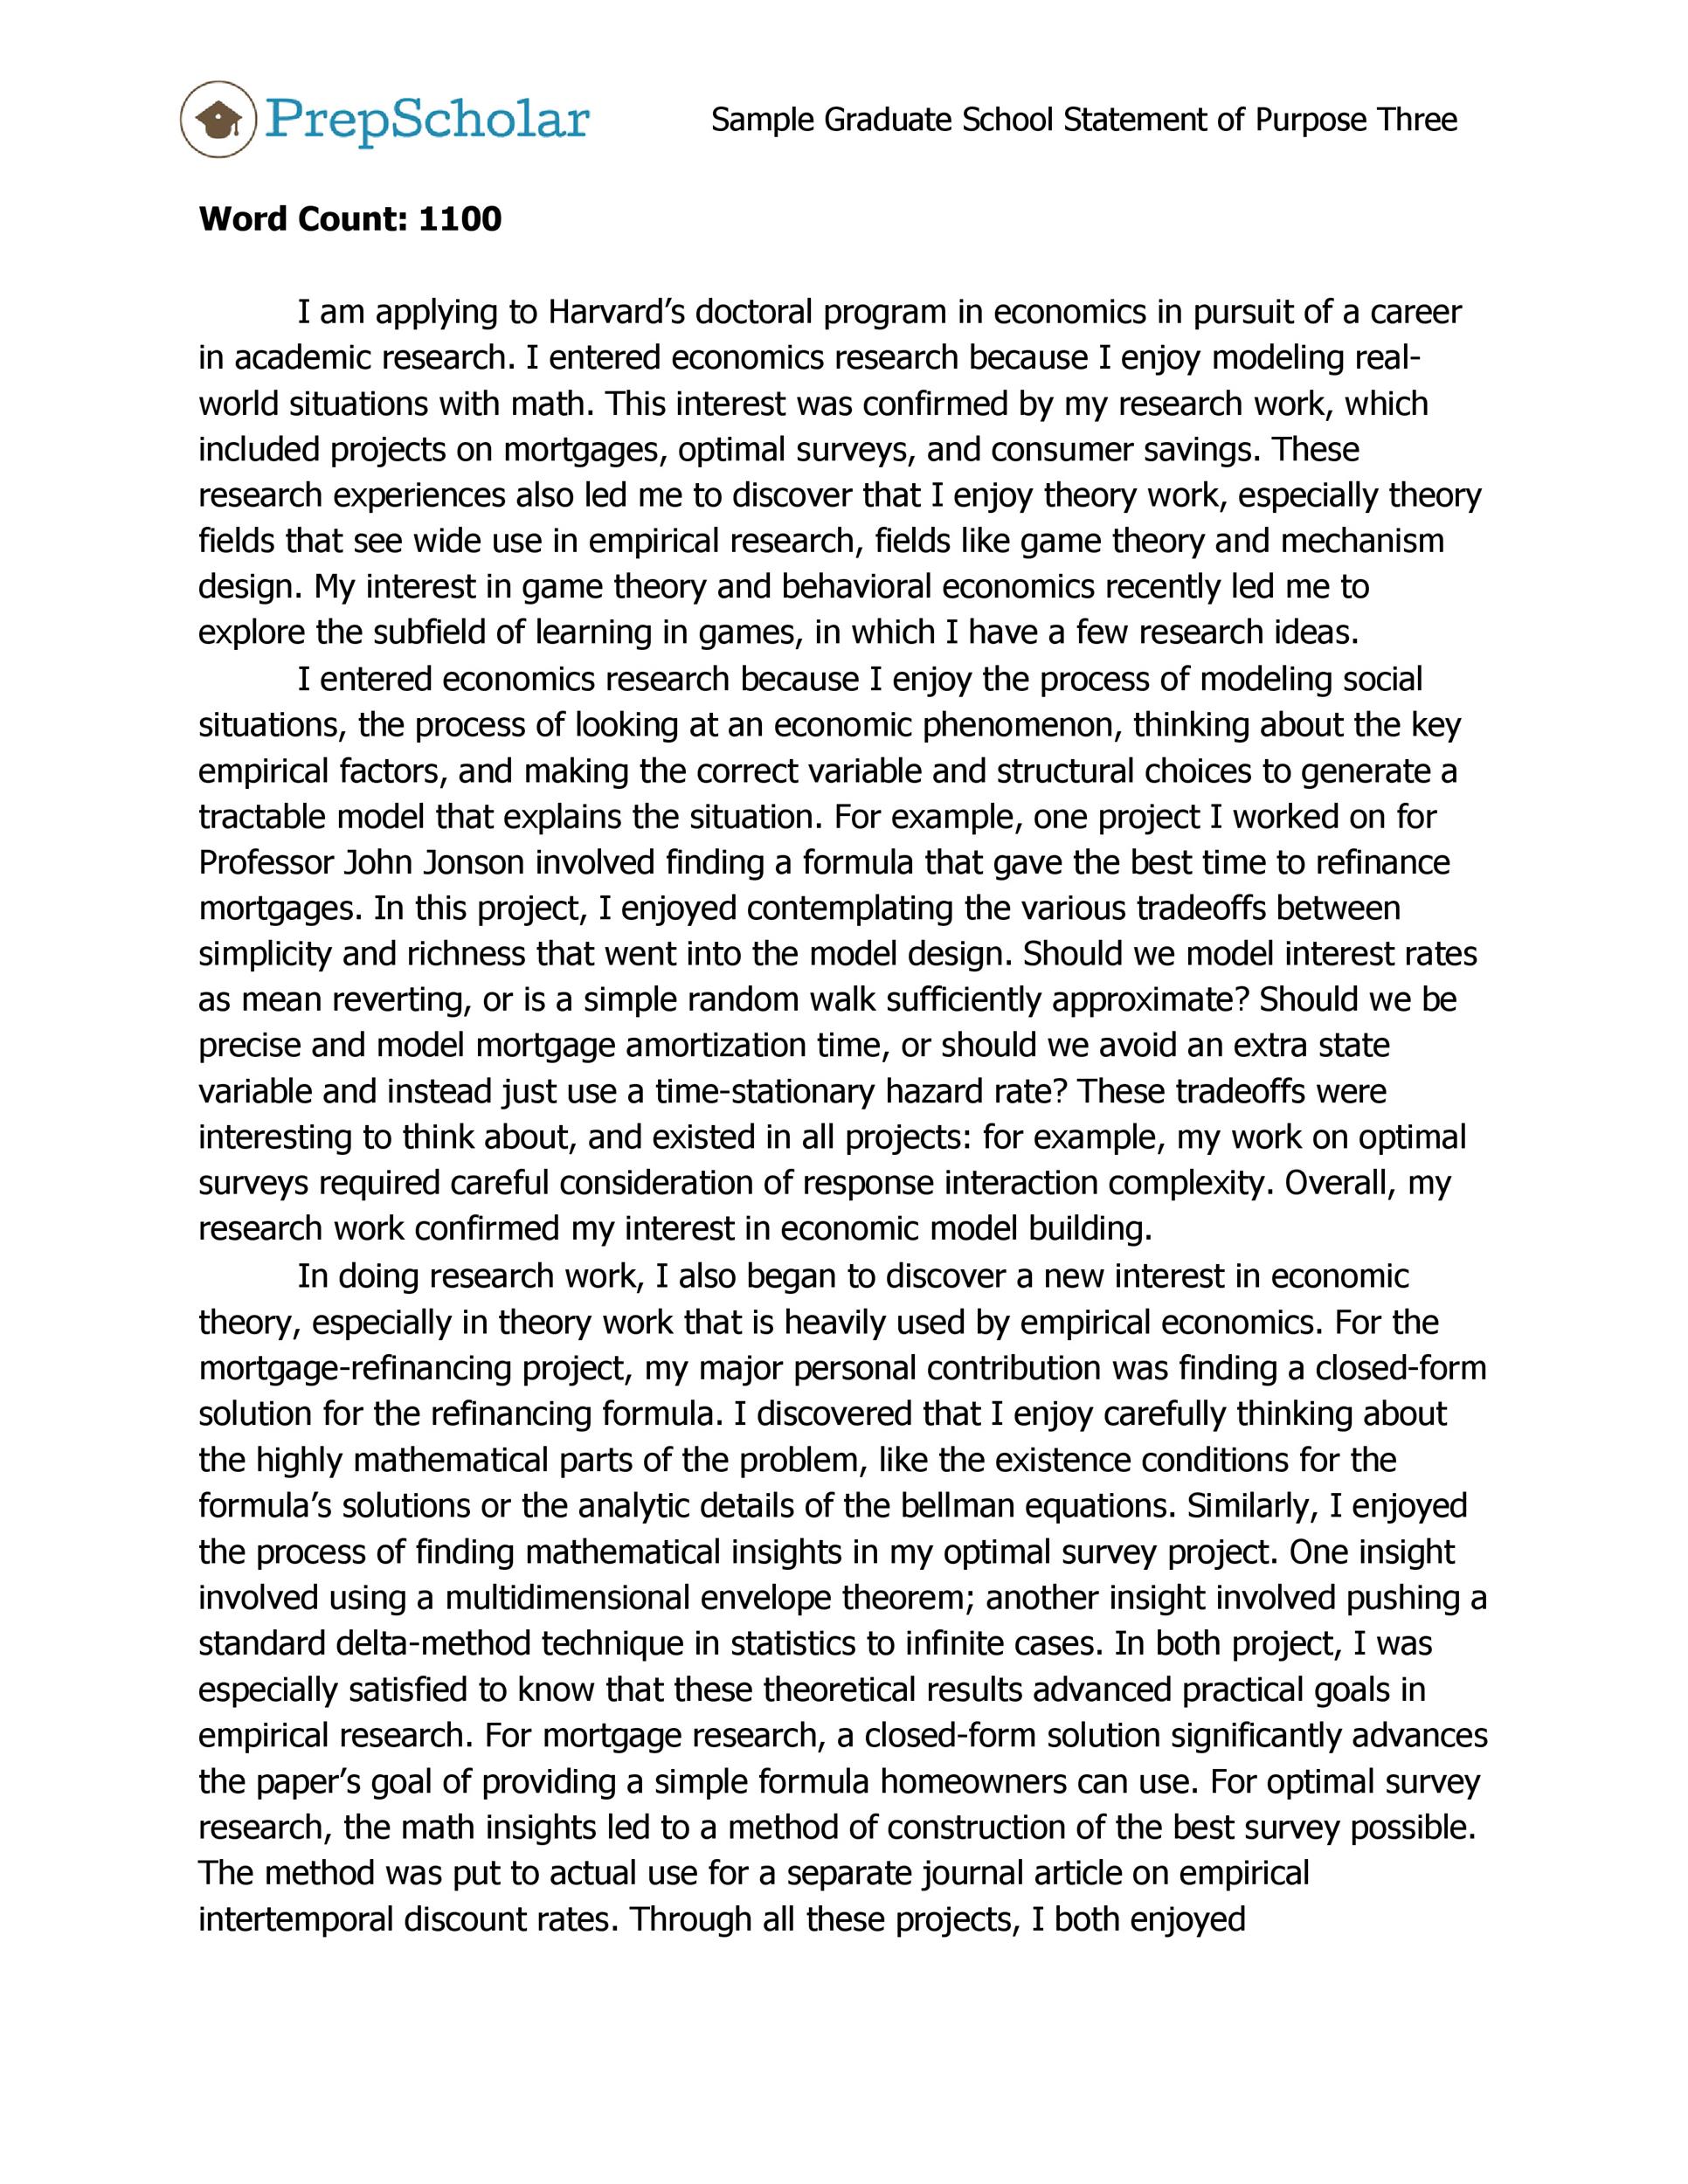 statement of intent grad school